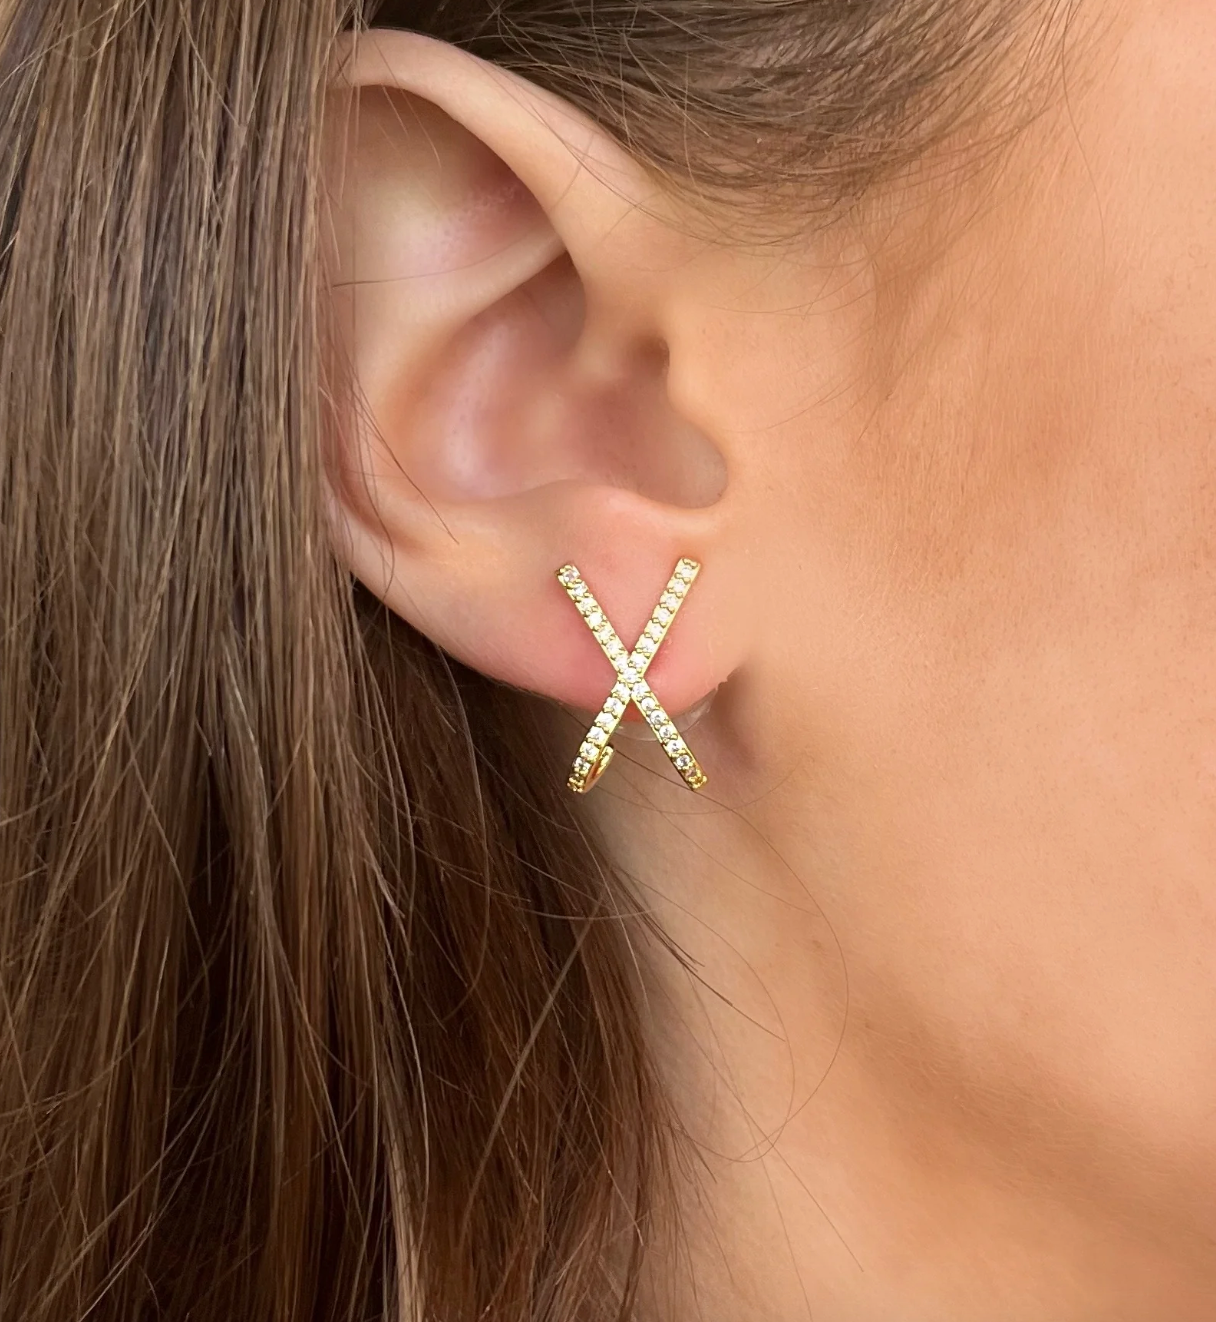 Pave Criss Cross Stud Earrings in Gold